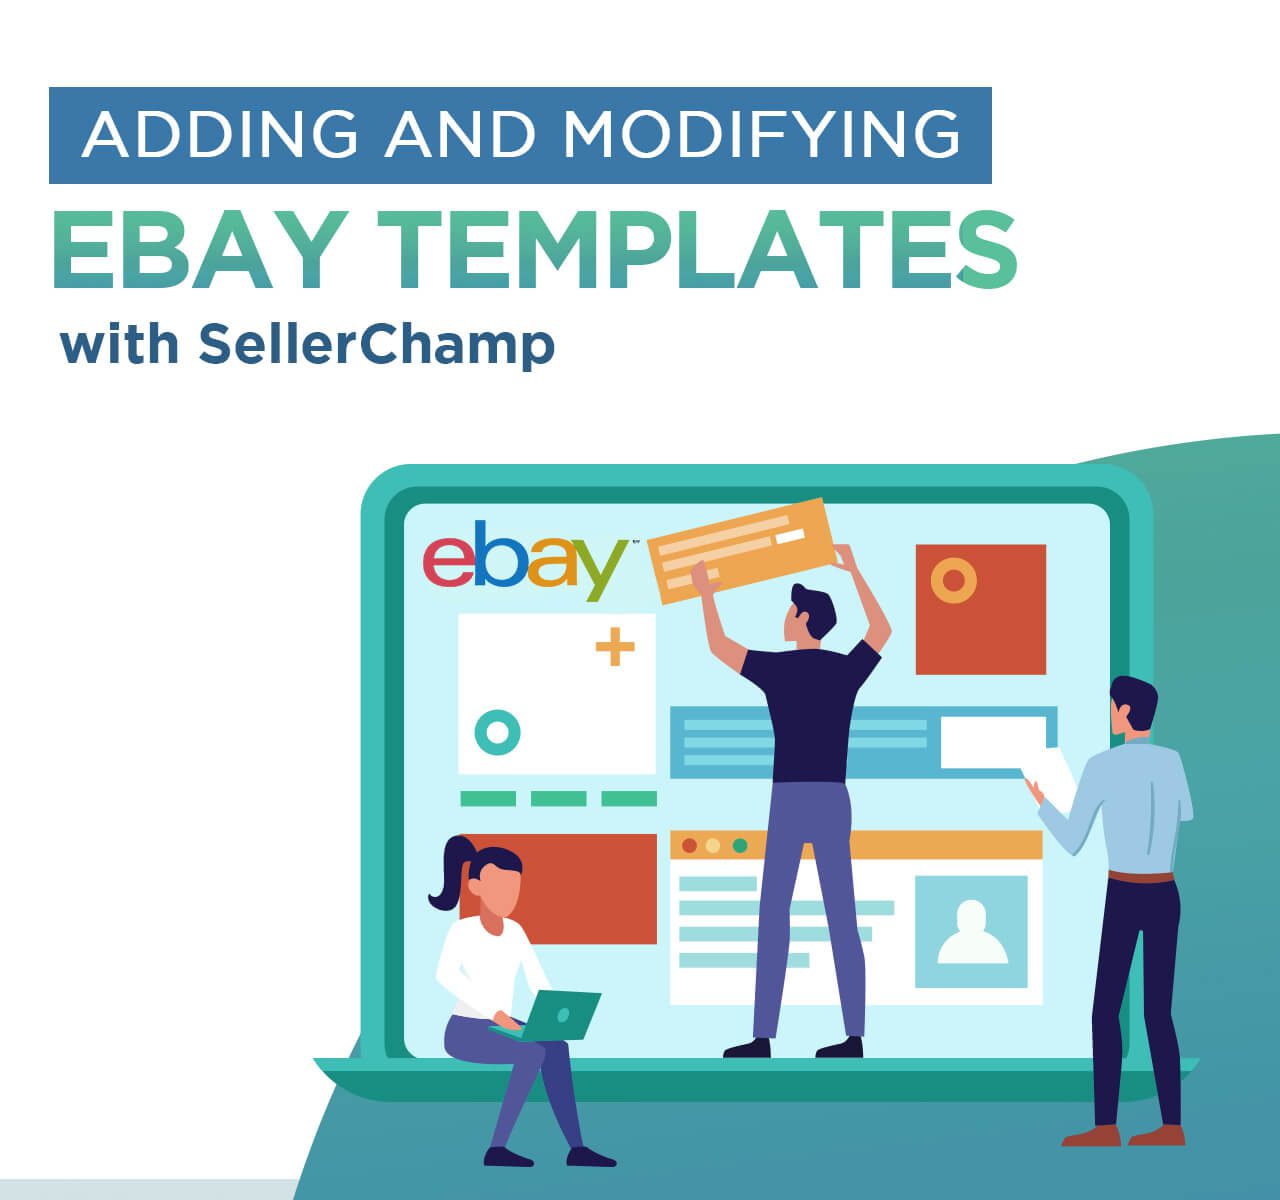 Adding and modifying eBay templates